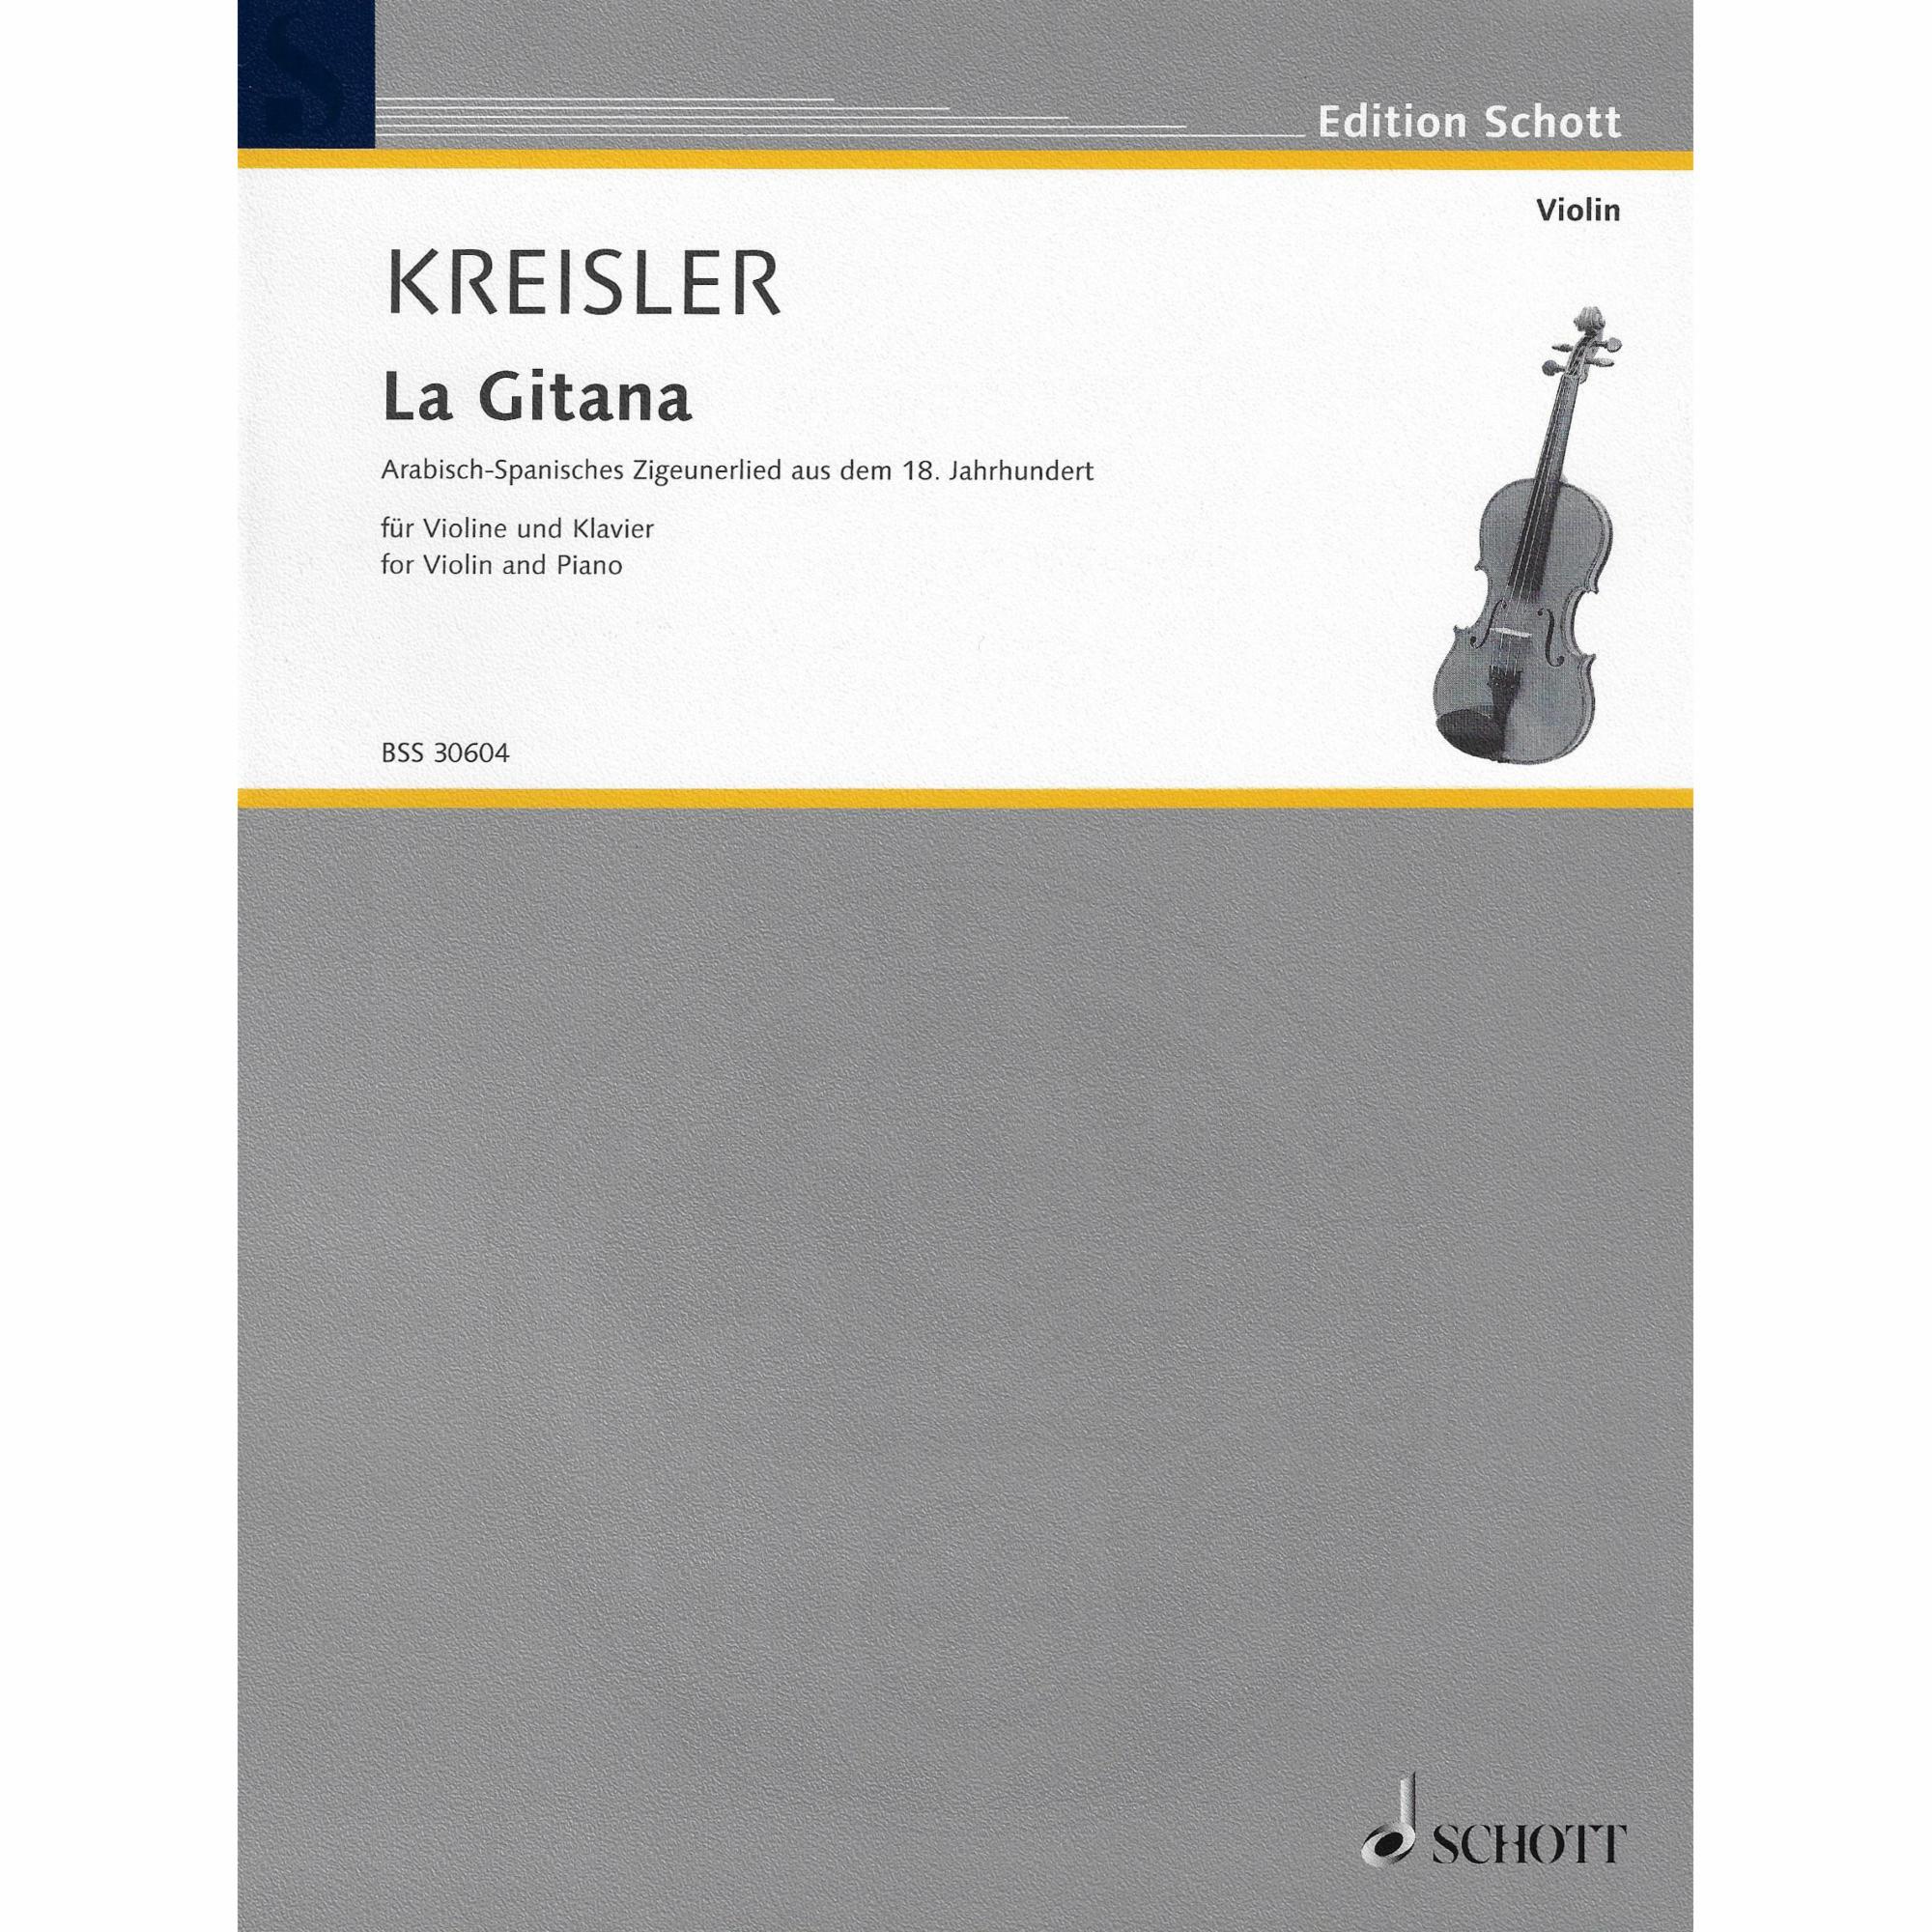 Kreisler -- La Gitana for Violin and Piano